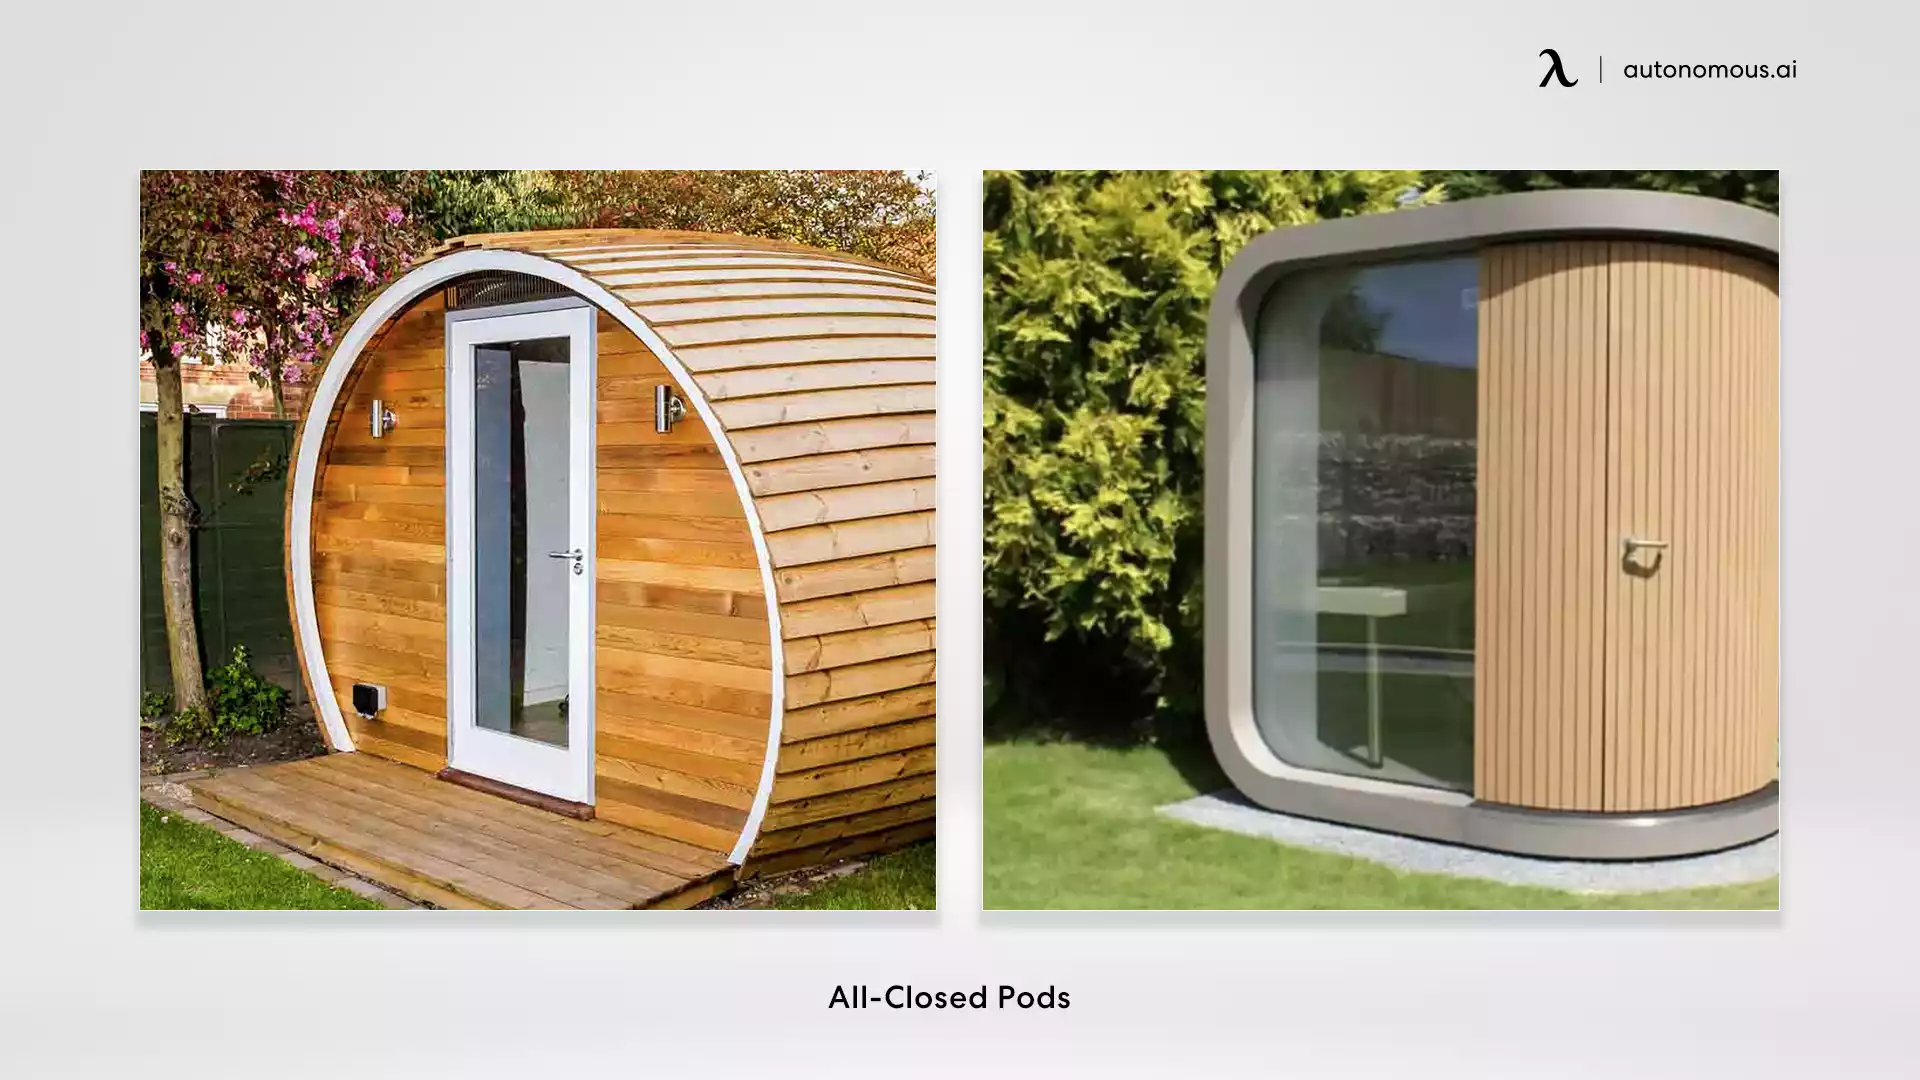 All-Closed Pods garden office ideas